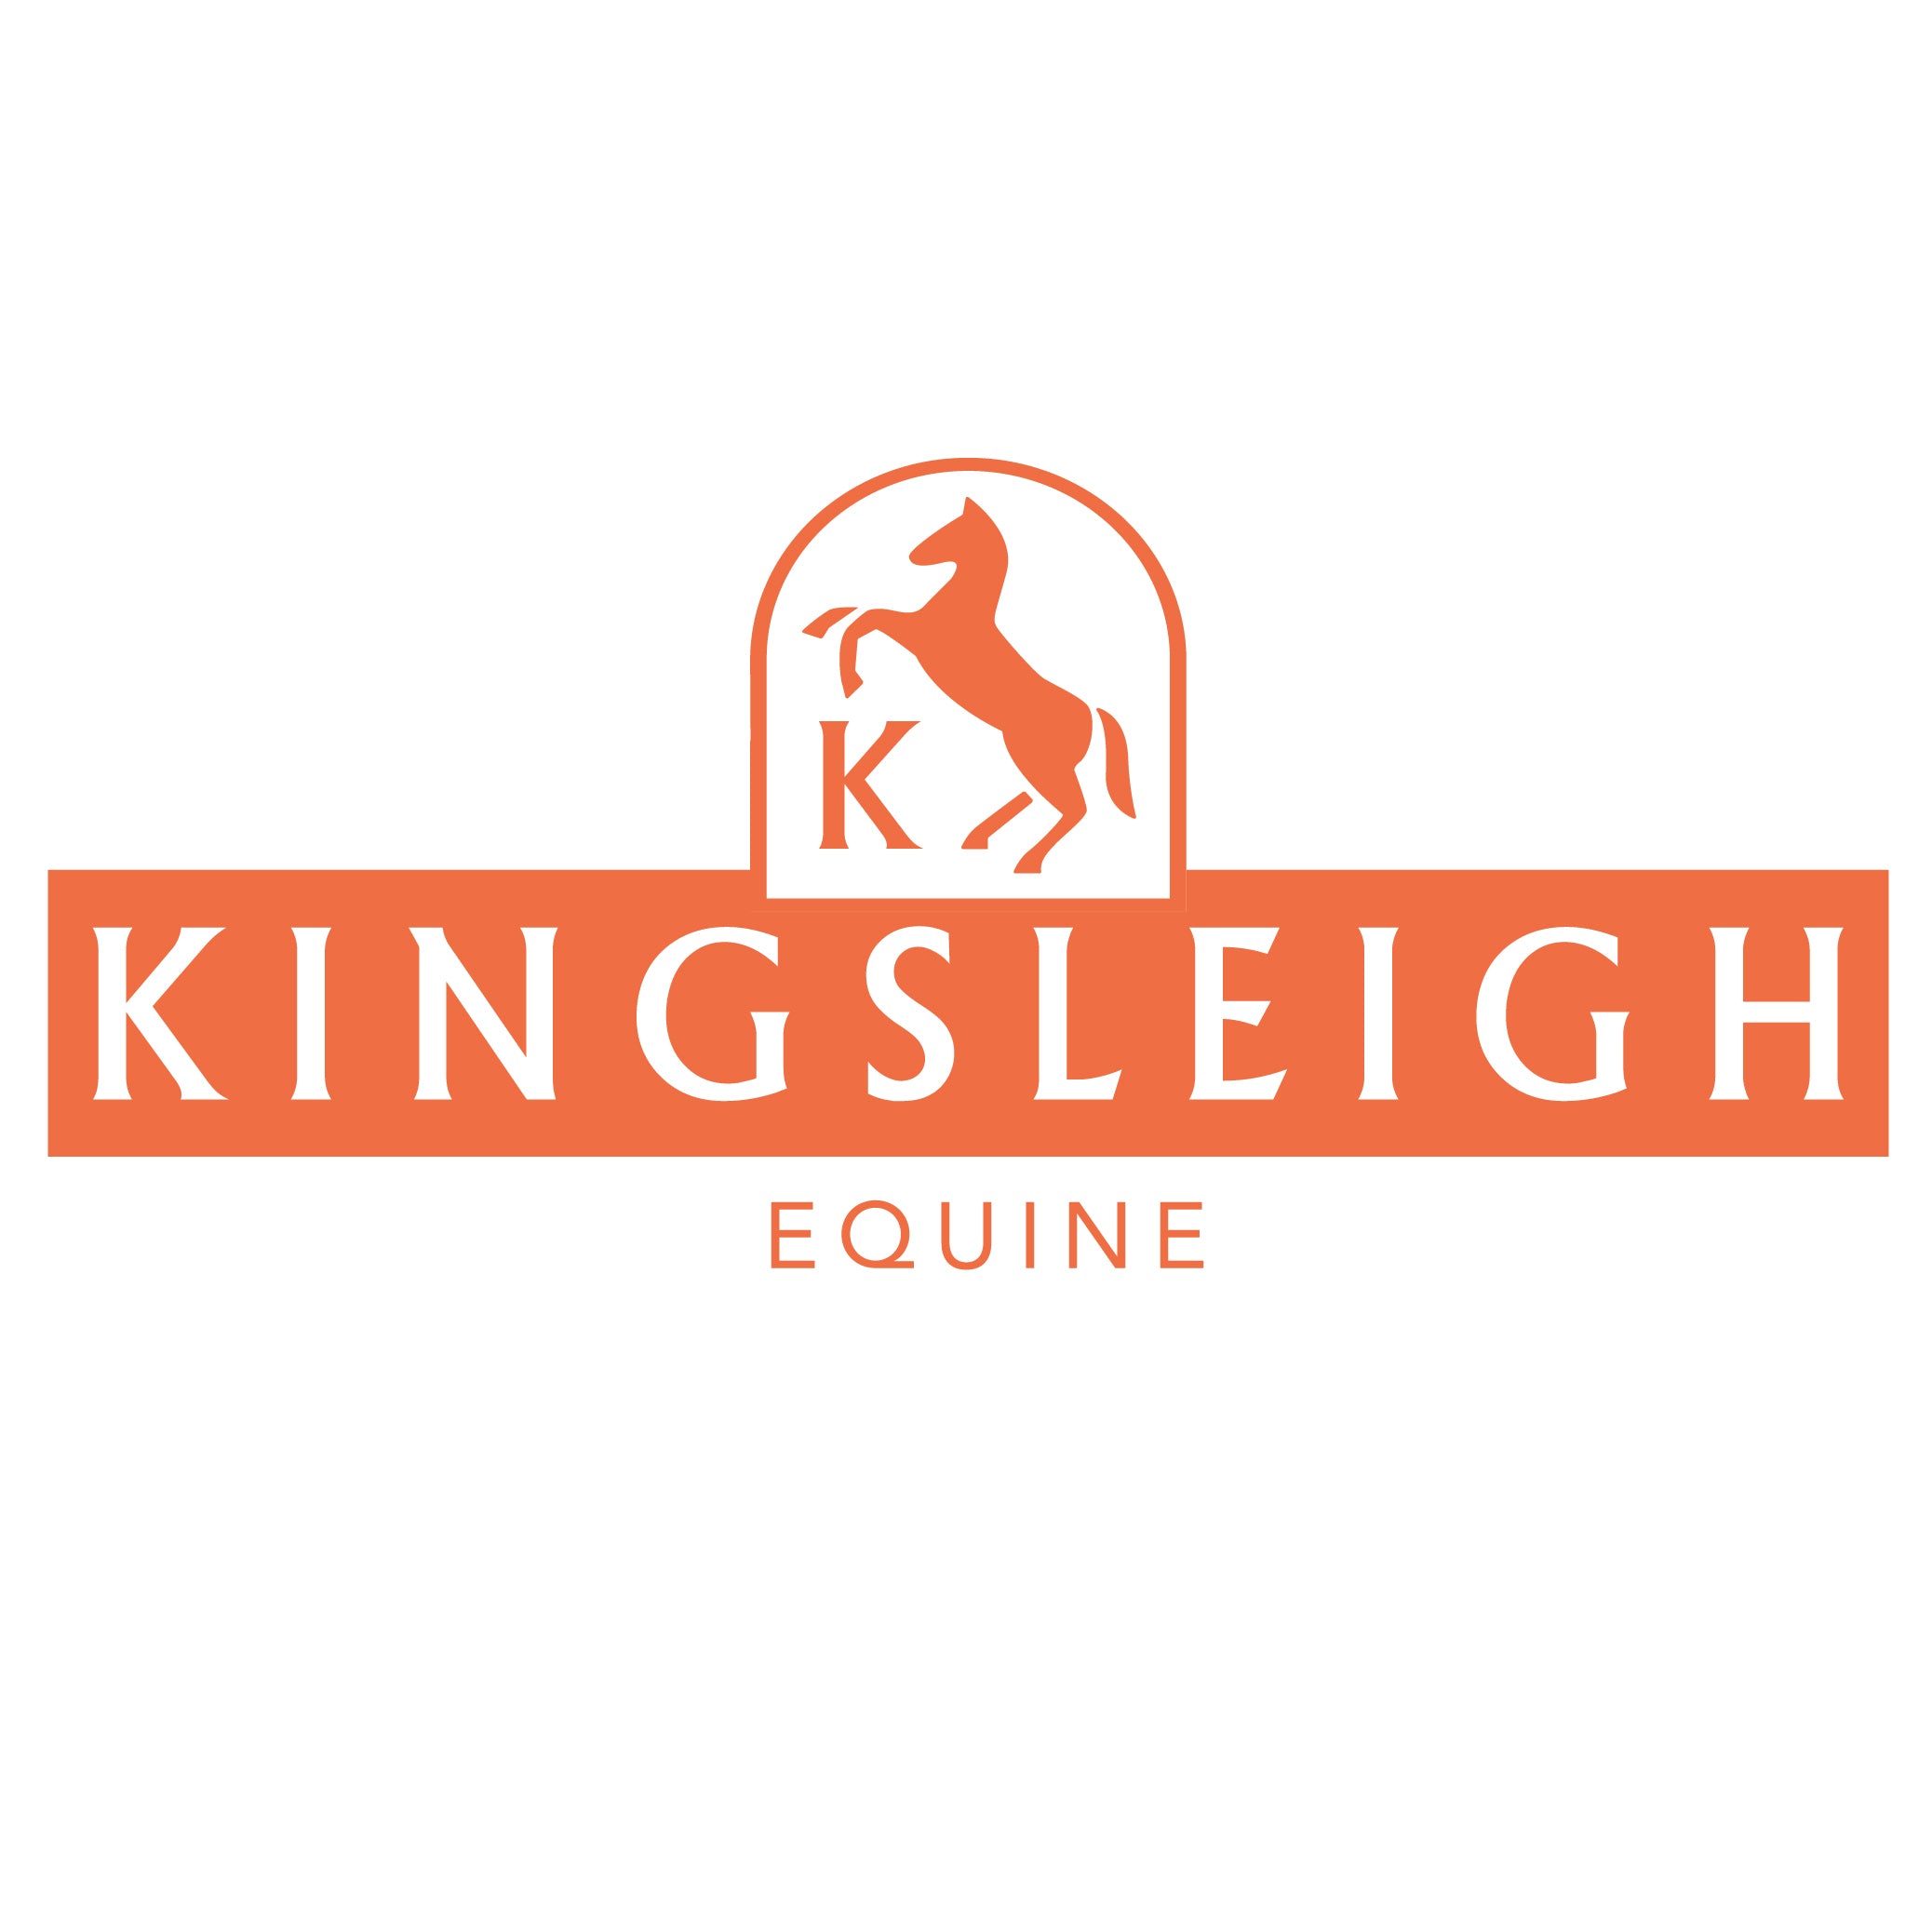 Kingsleigh Equine